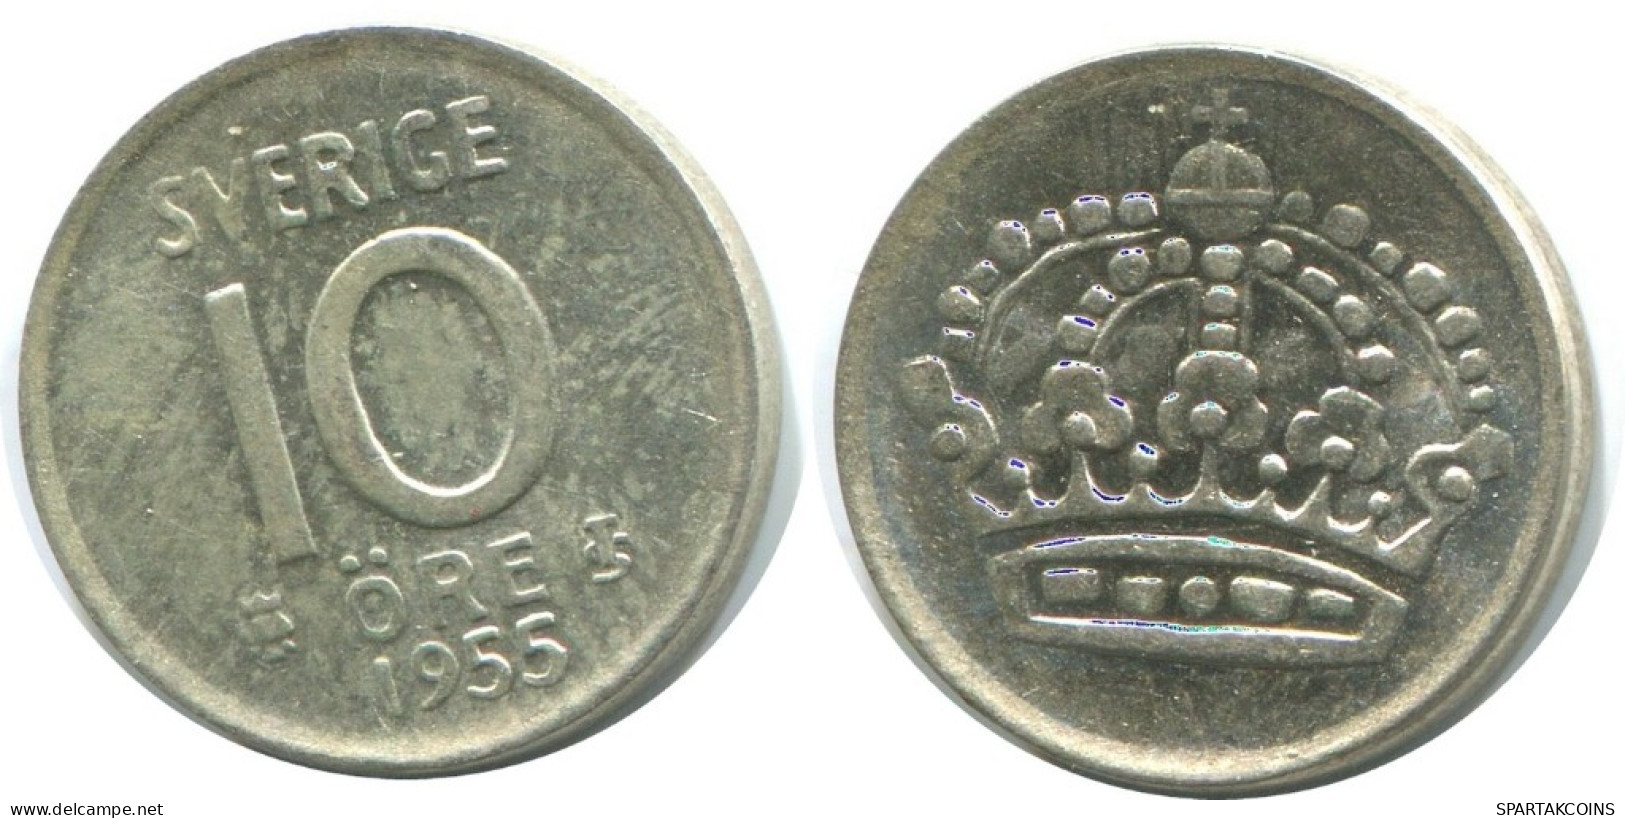 10 ORE 1955 SCHWEDEN SWEDEN SILBER Münze #AD024.2.D.A - Schweden